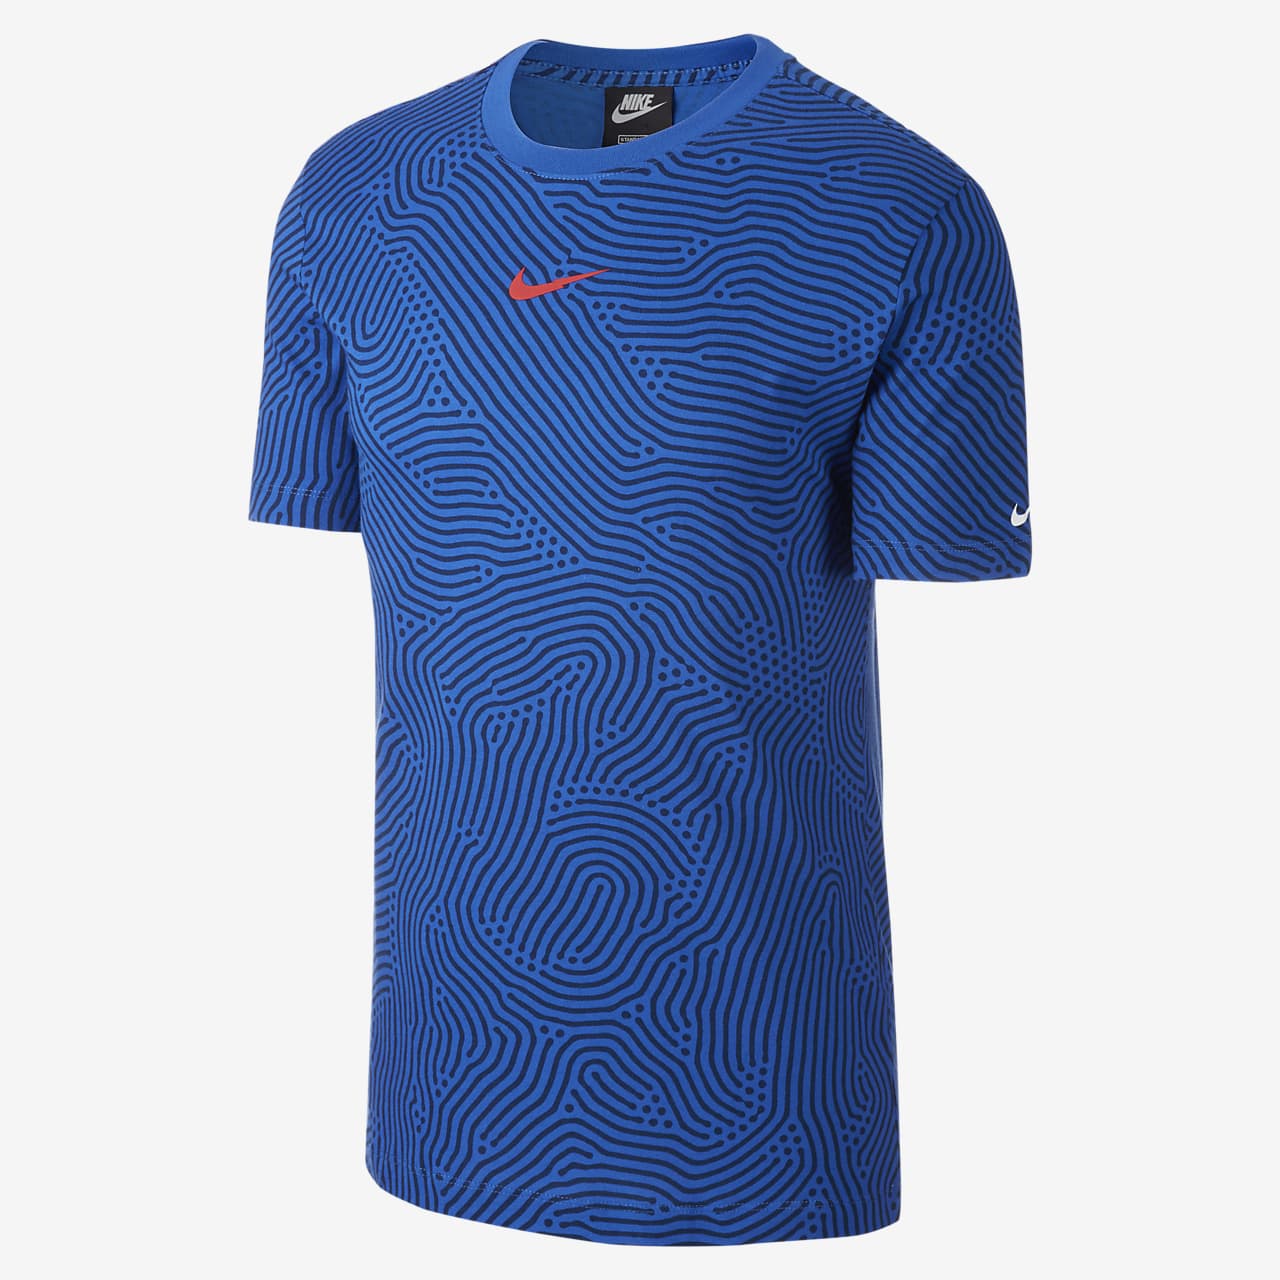 Nike Sportswear Herren-T-Shirt mit Print